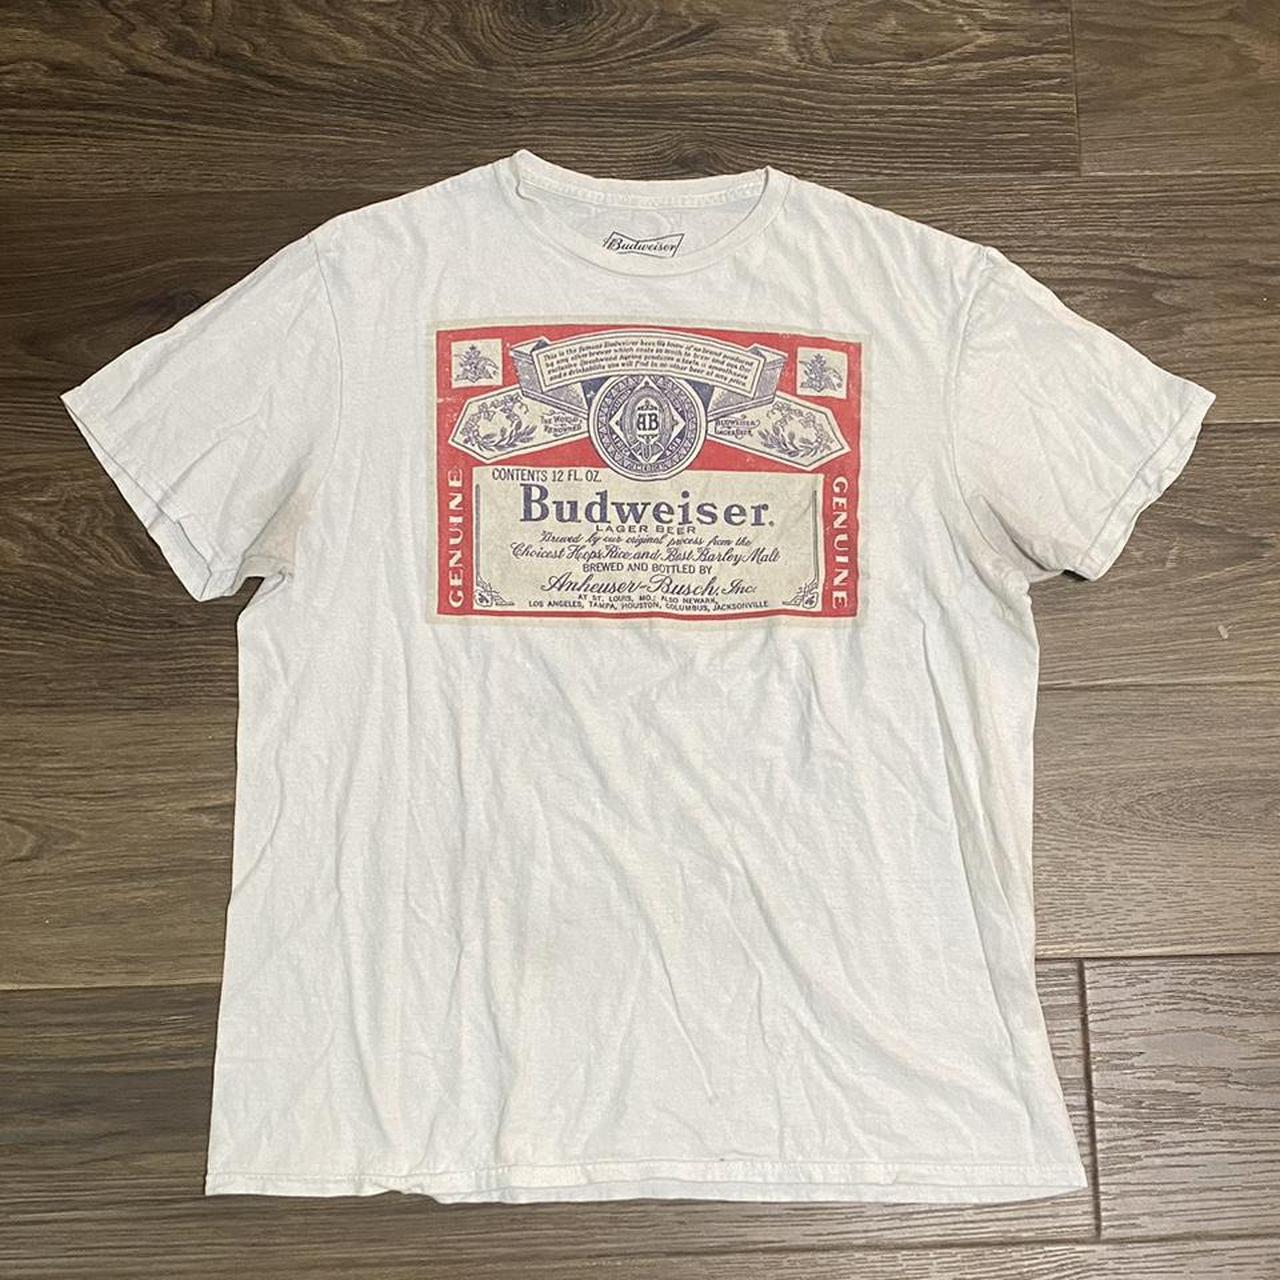 Budweiser Men's White T-shirt